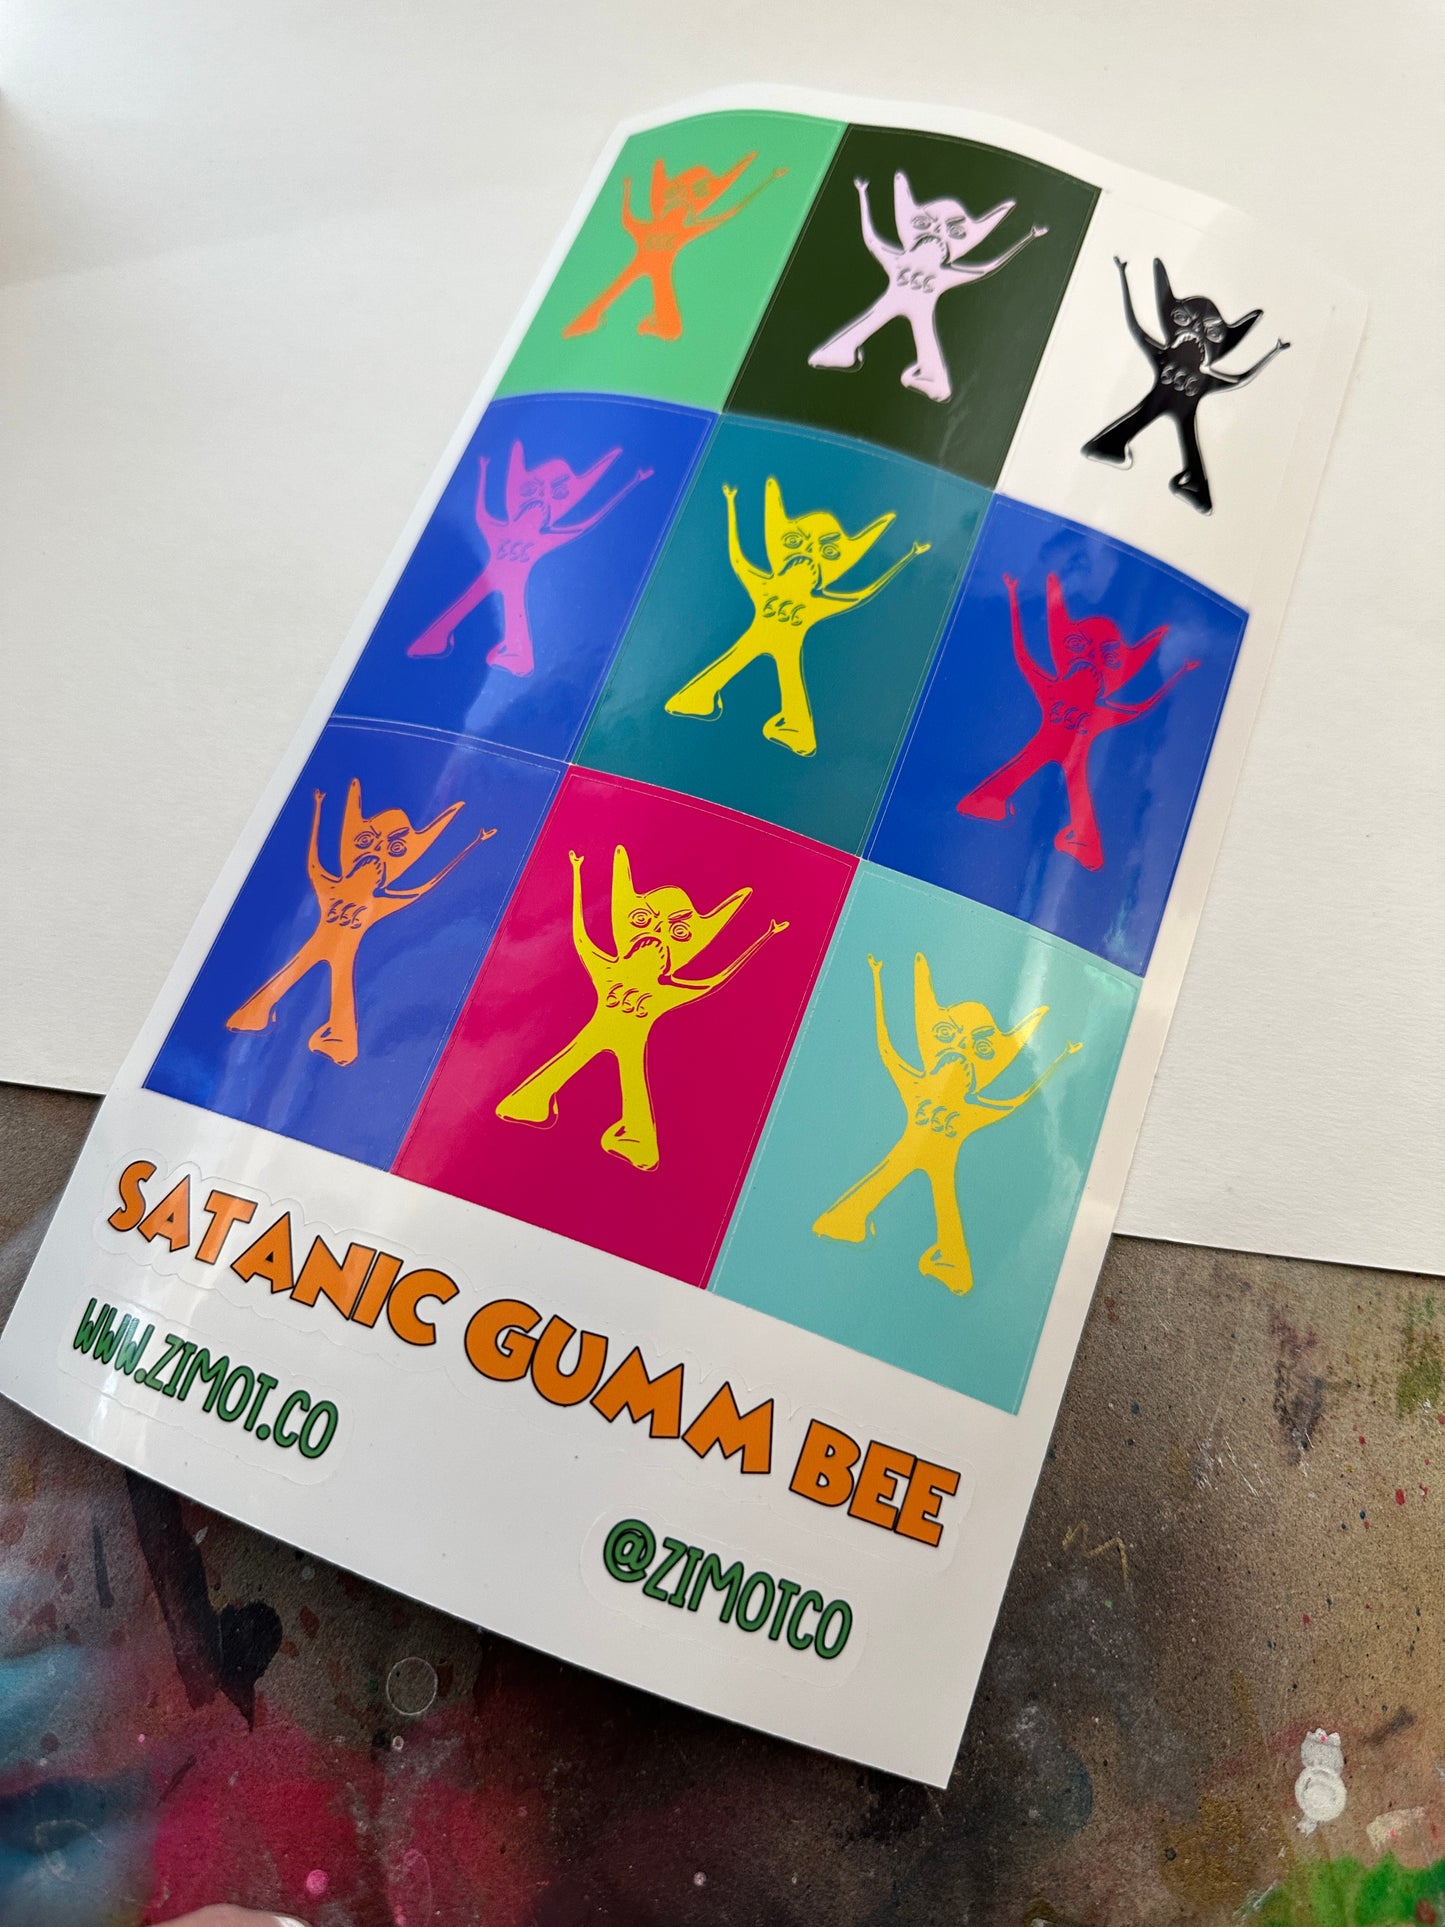 Satanic Gum-Bee Sticker Sheet